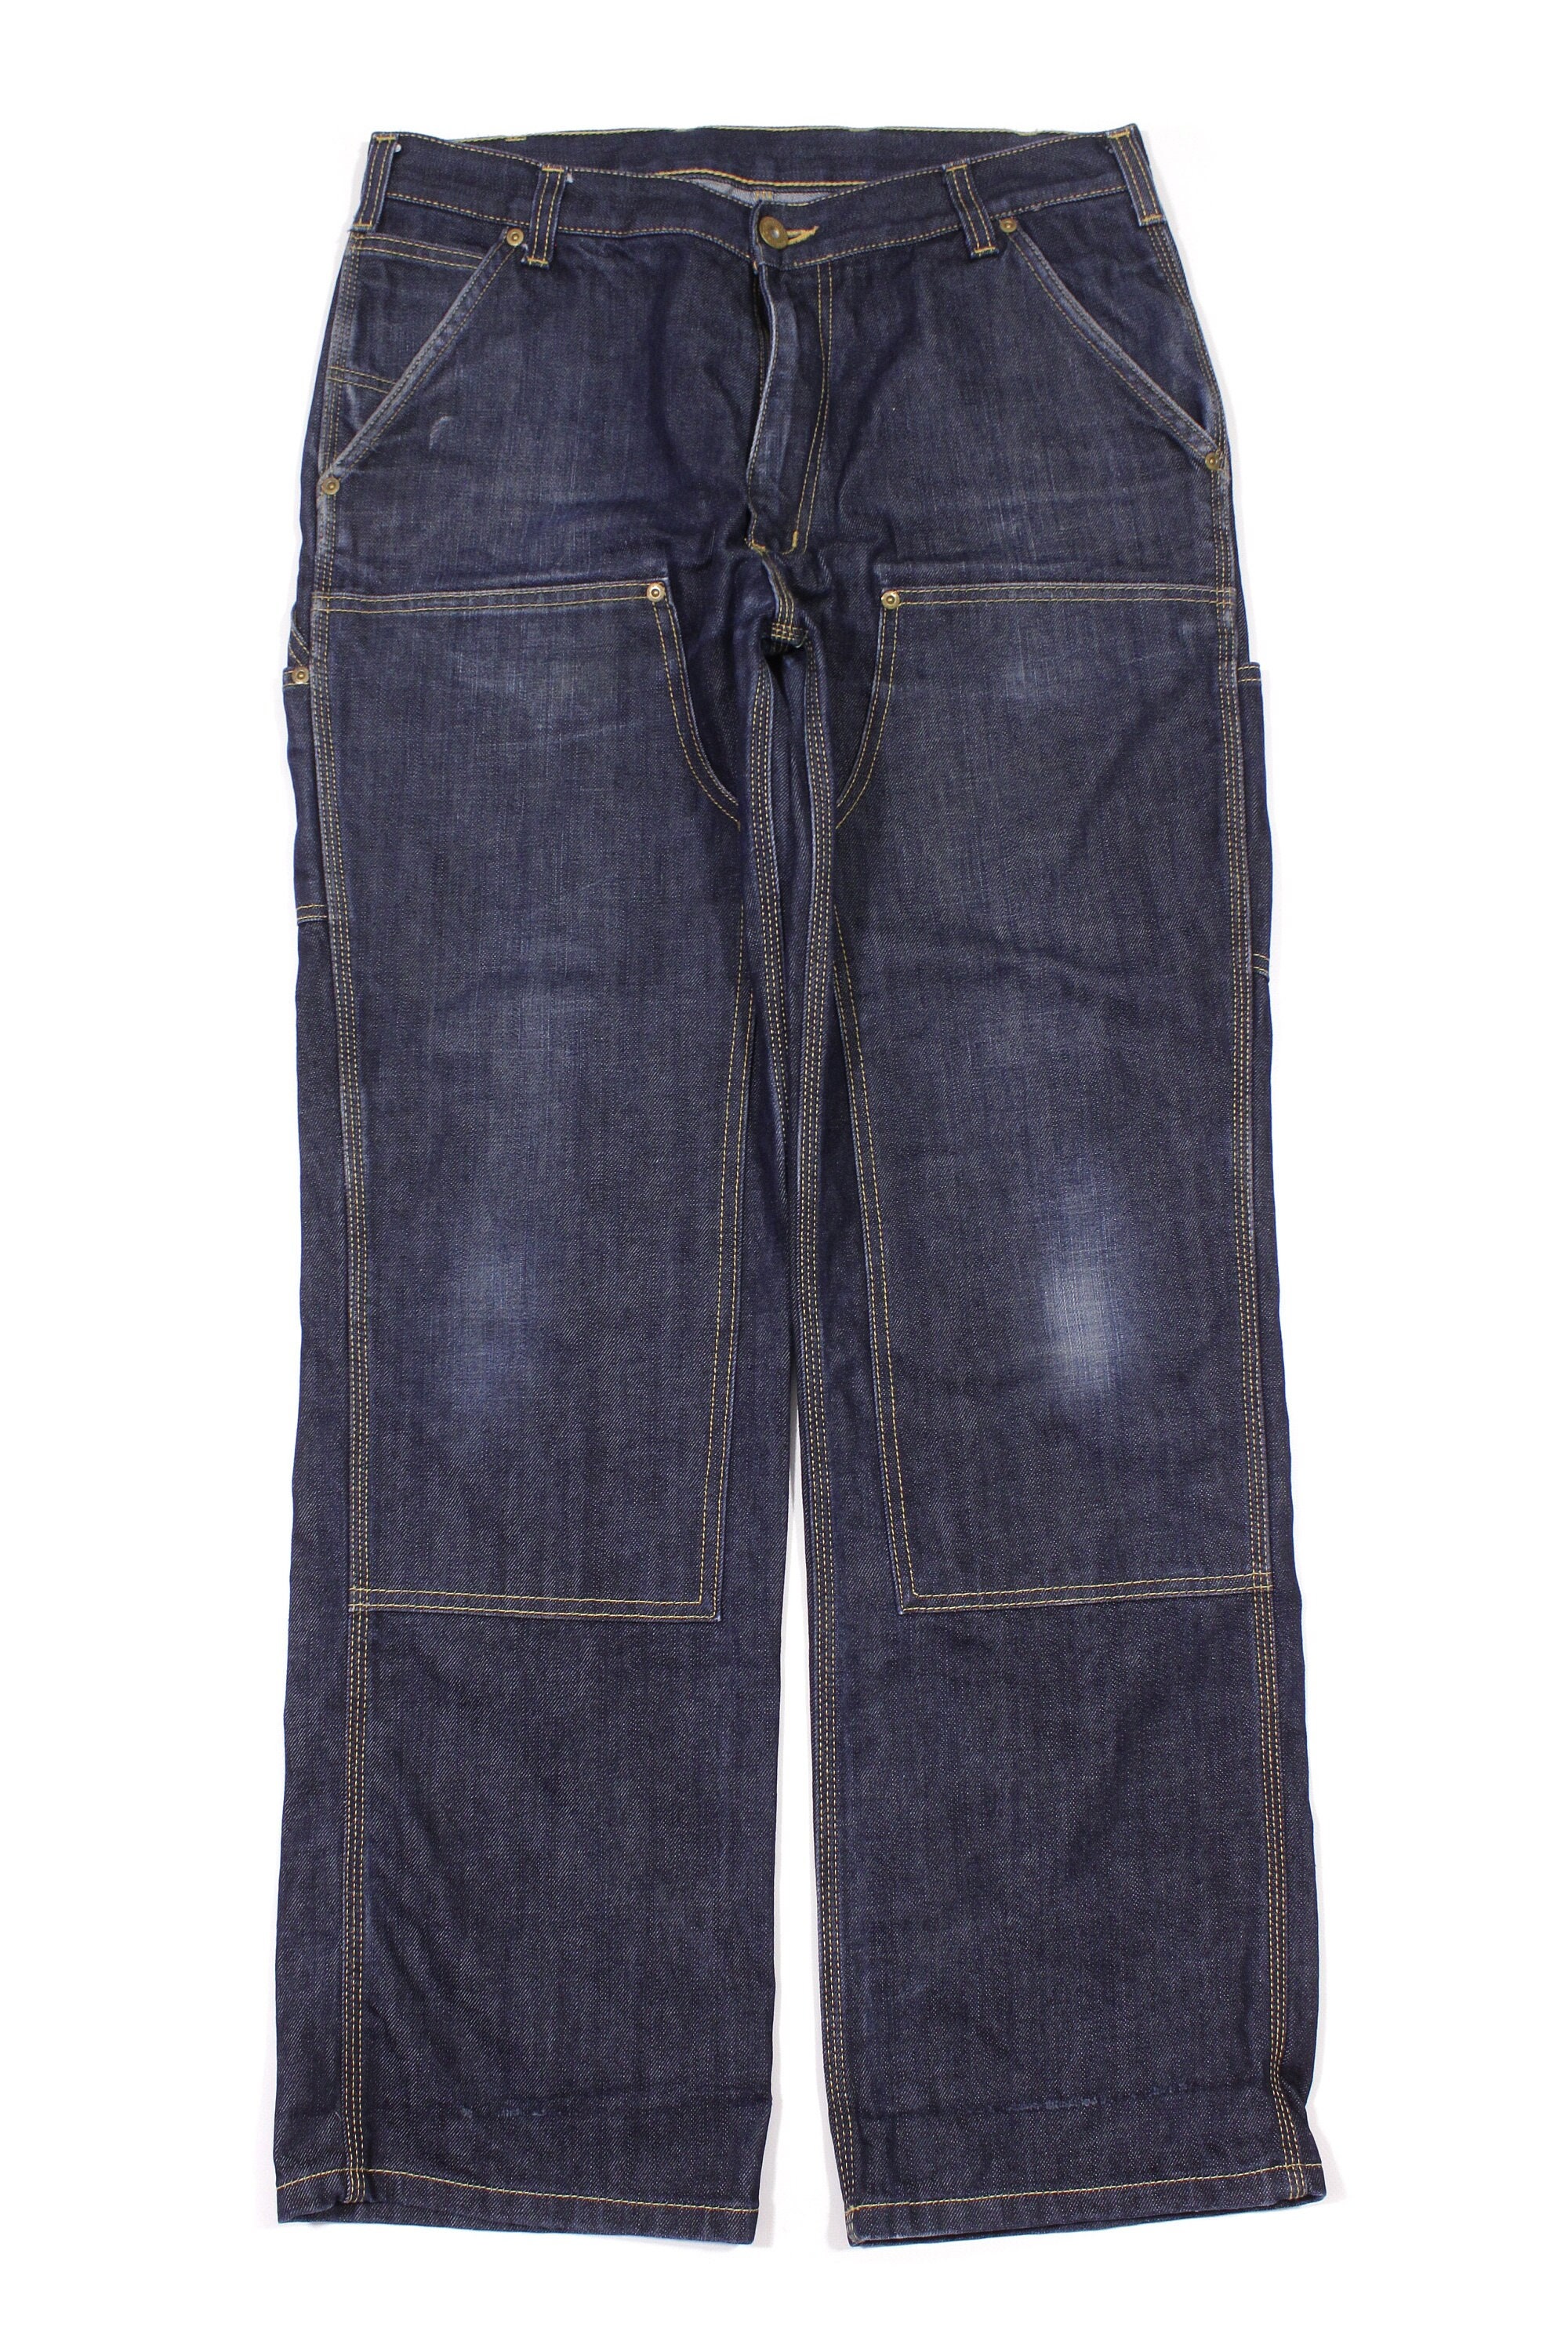 Carhartt Knee Jeans Vintage - Etsy